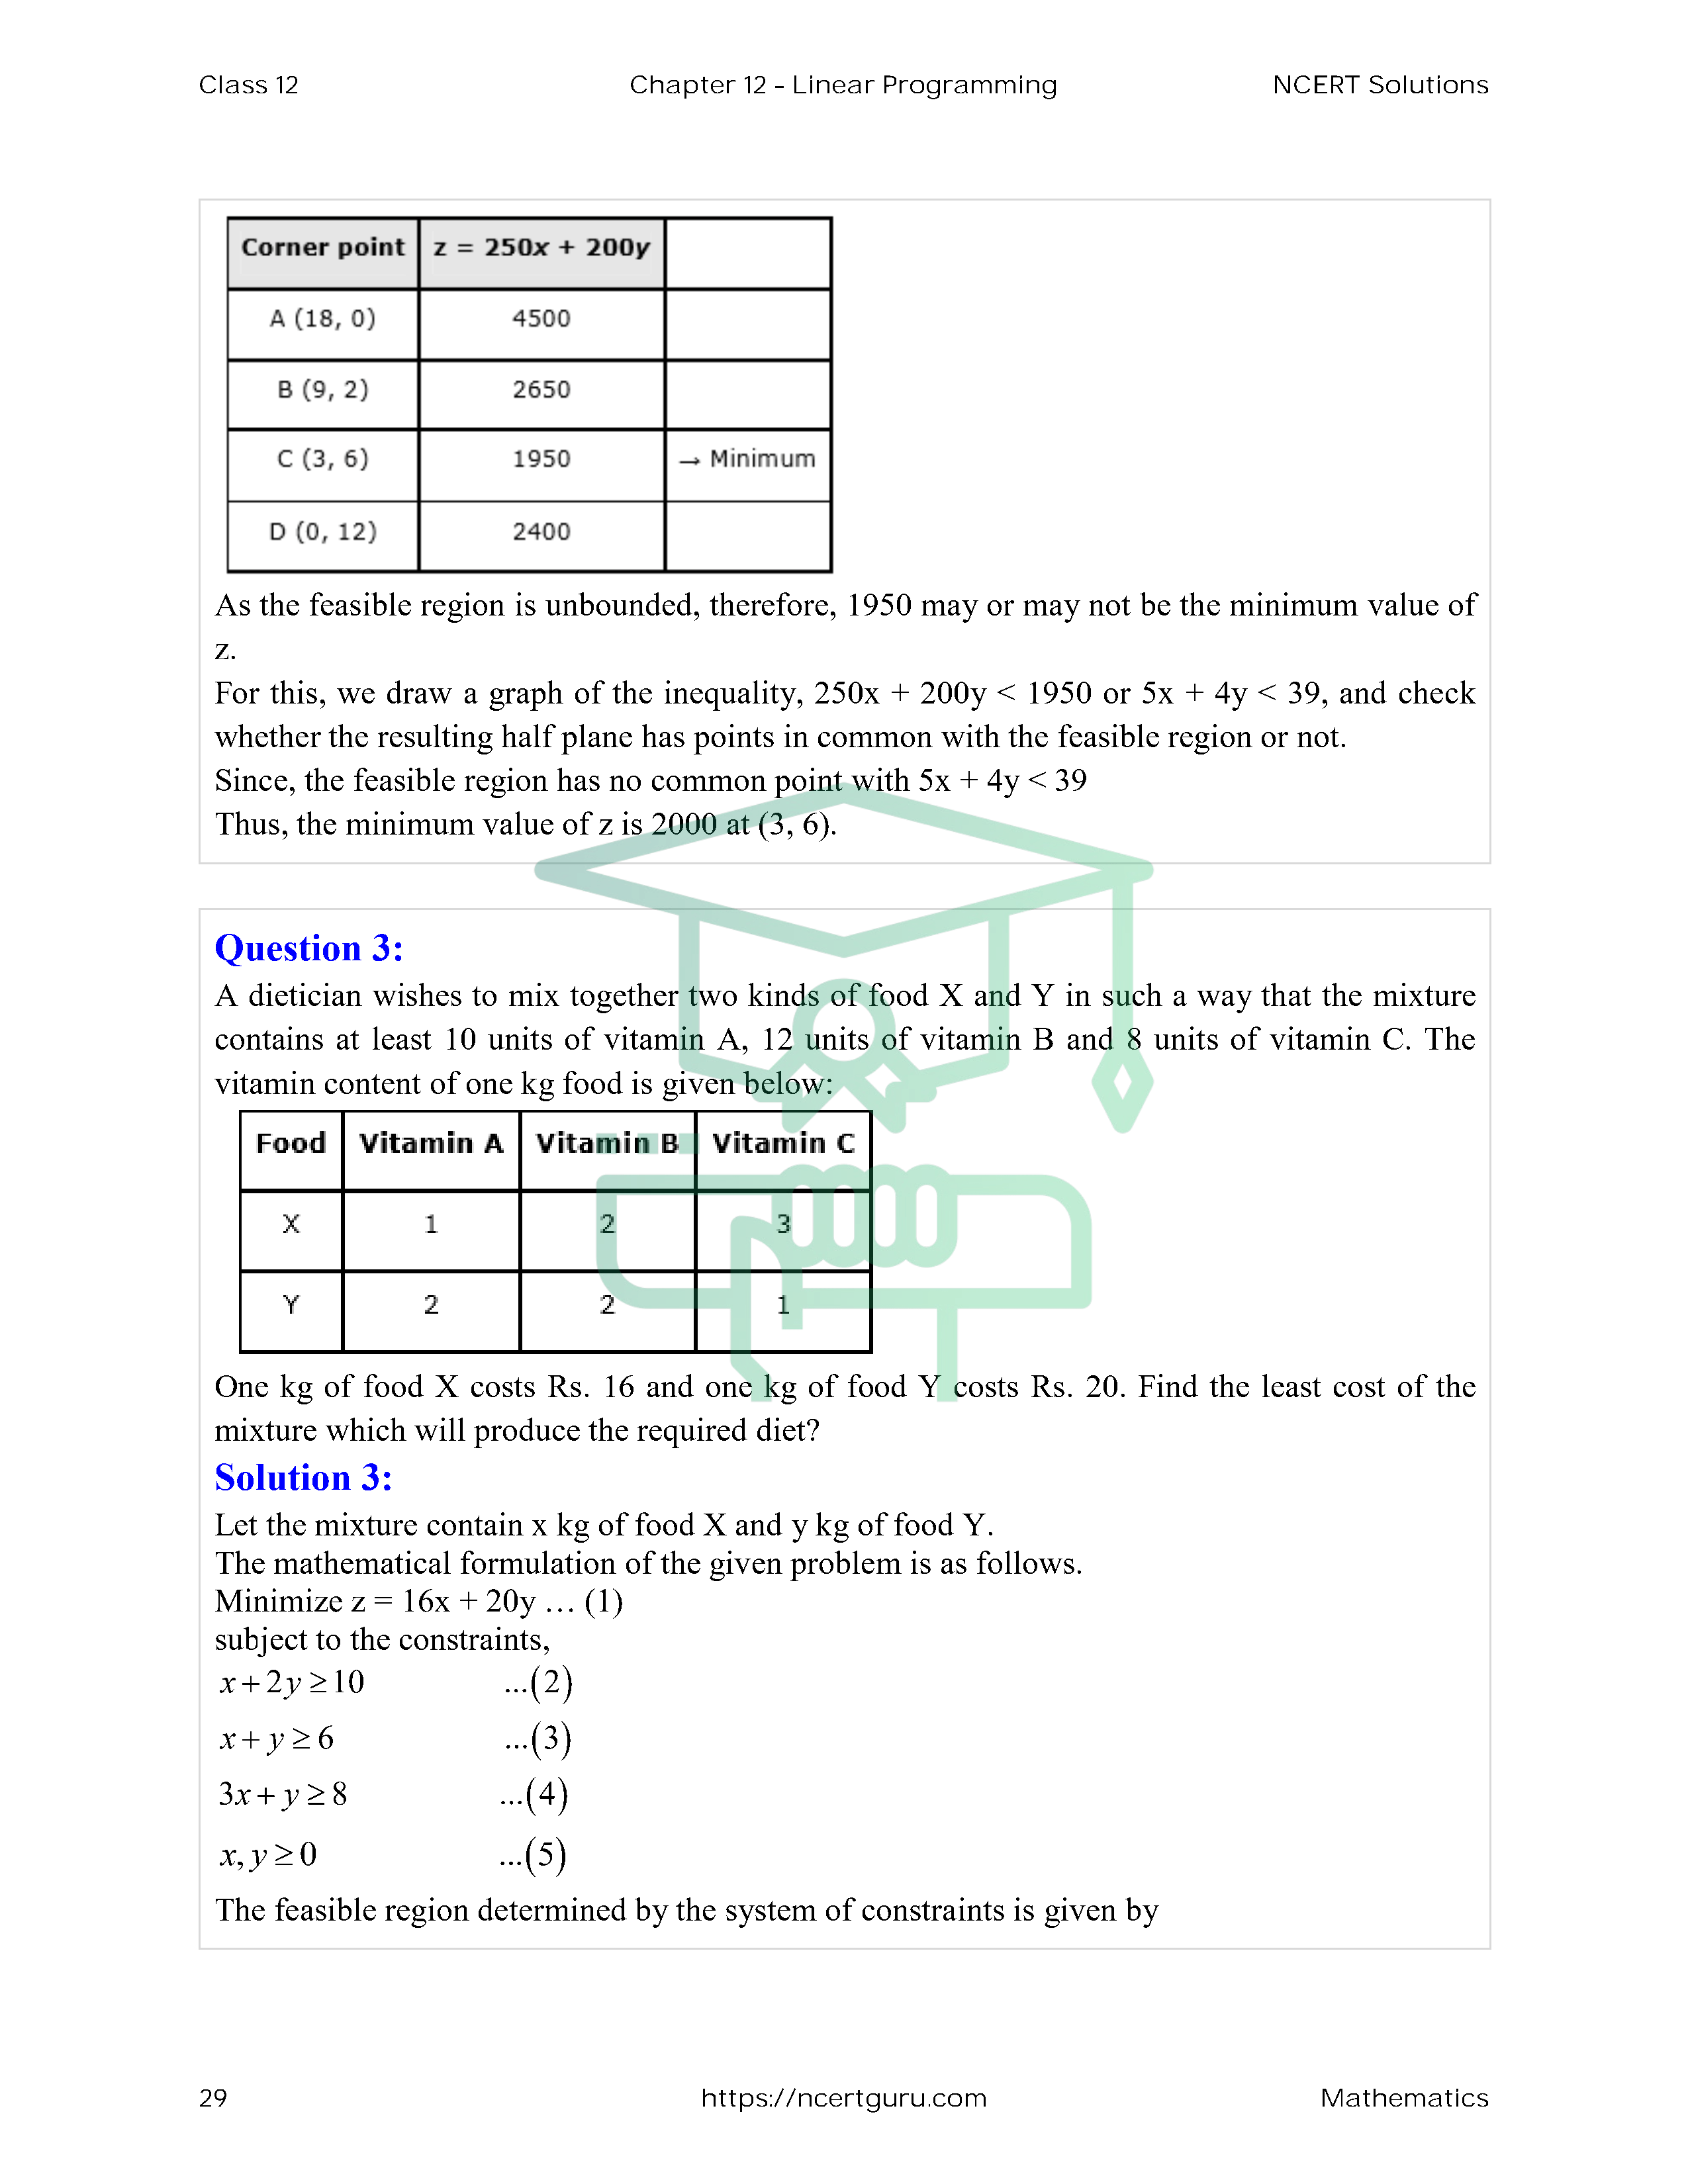 NCERT Solutions for Class 12 Maths Chapter 12 Linear Programming